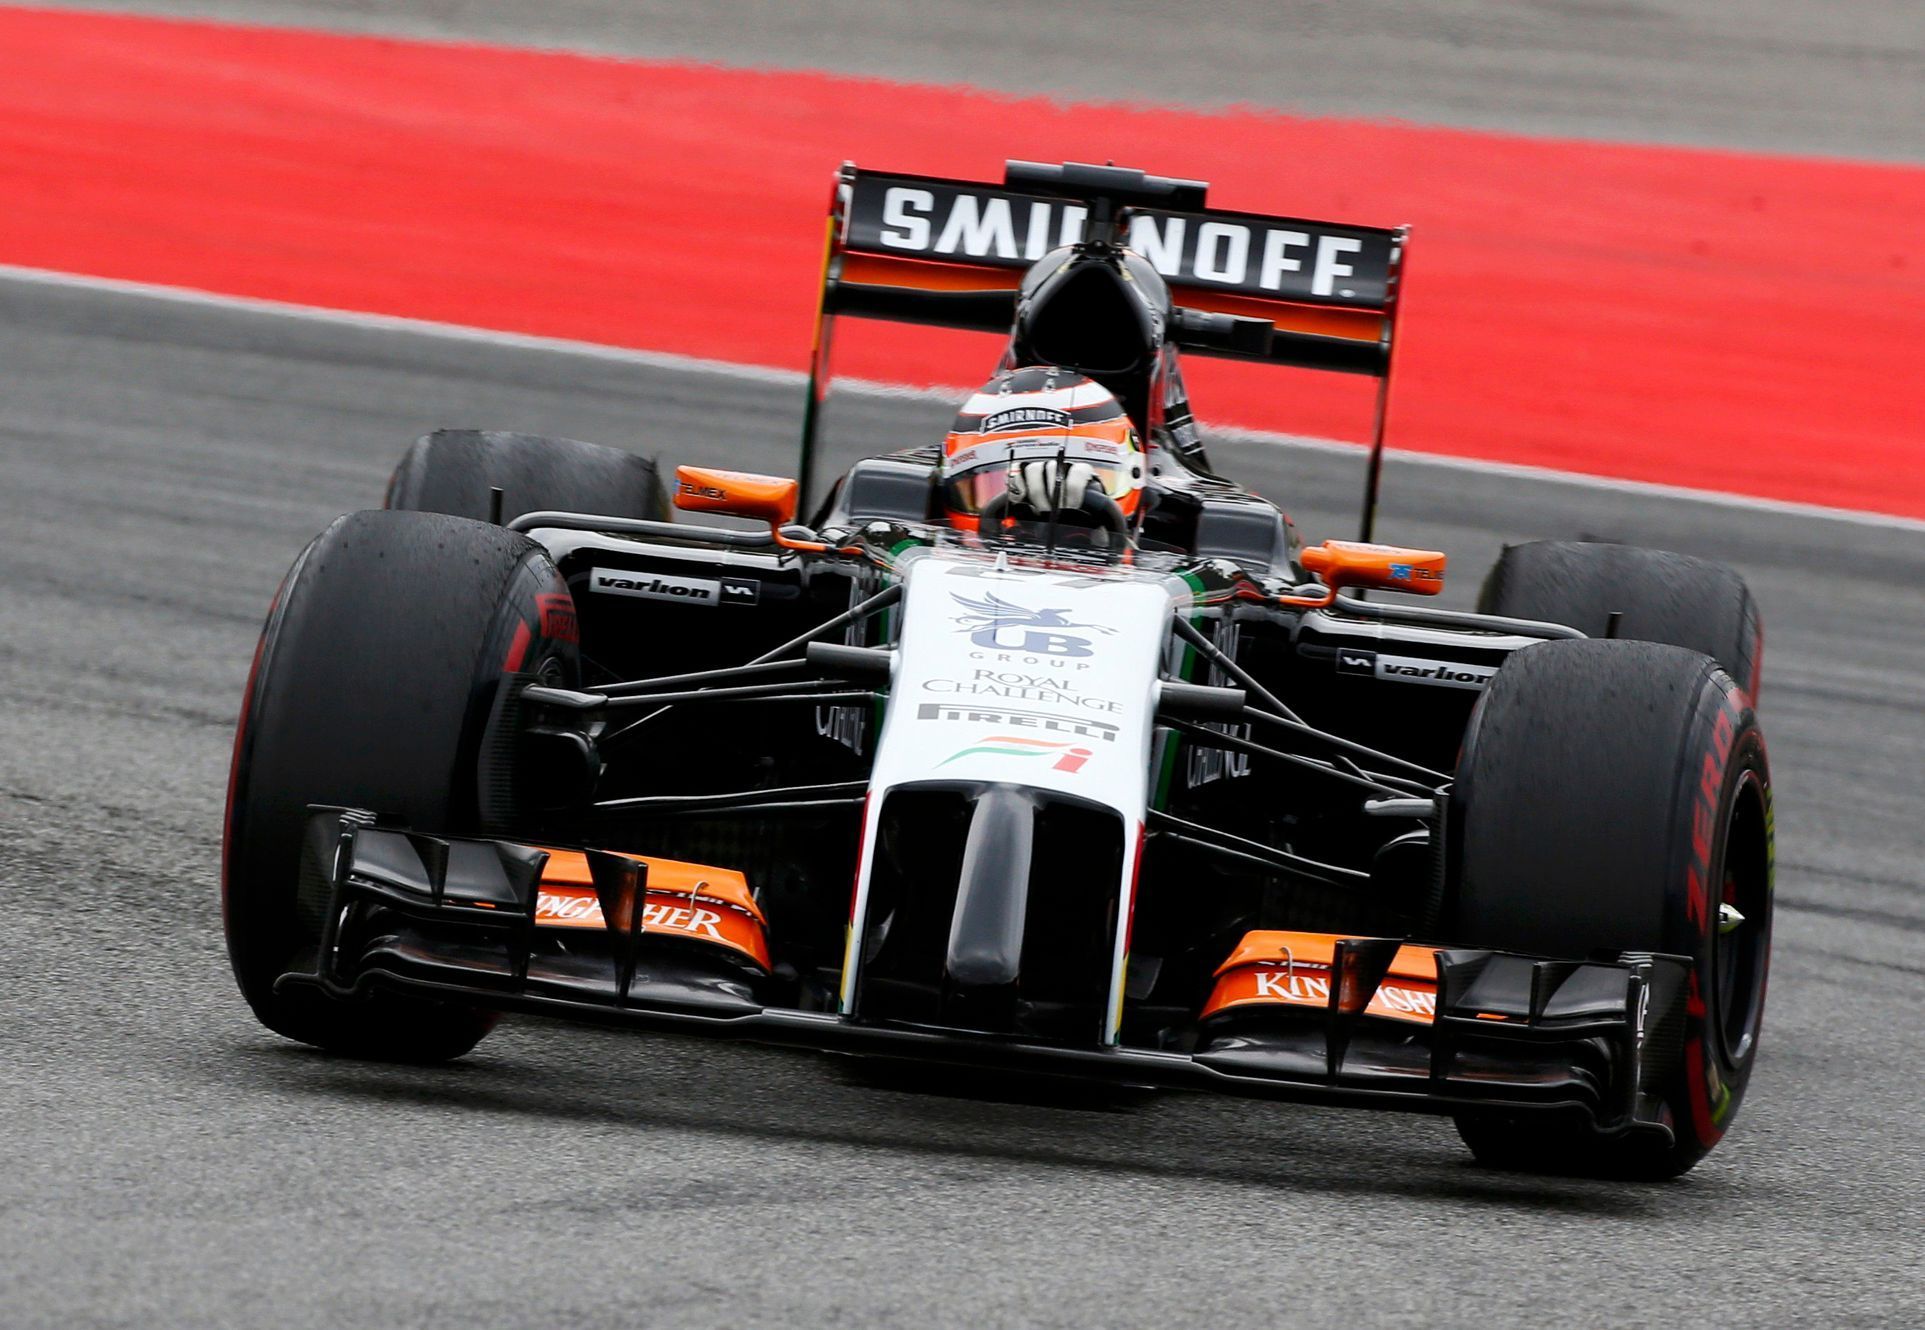 Force India Formula One driver Hulkenberg of Germany drives through corner during German F1 Grand Prix at Hockenheim